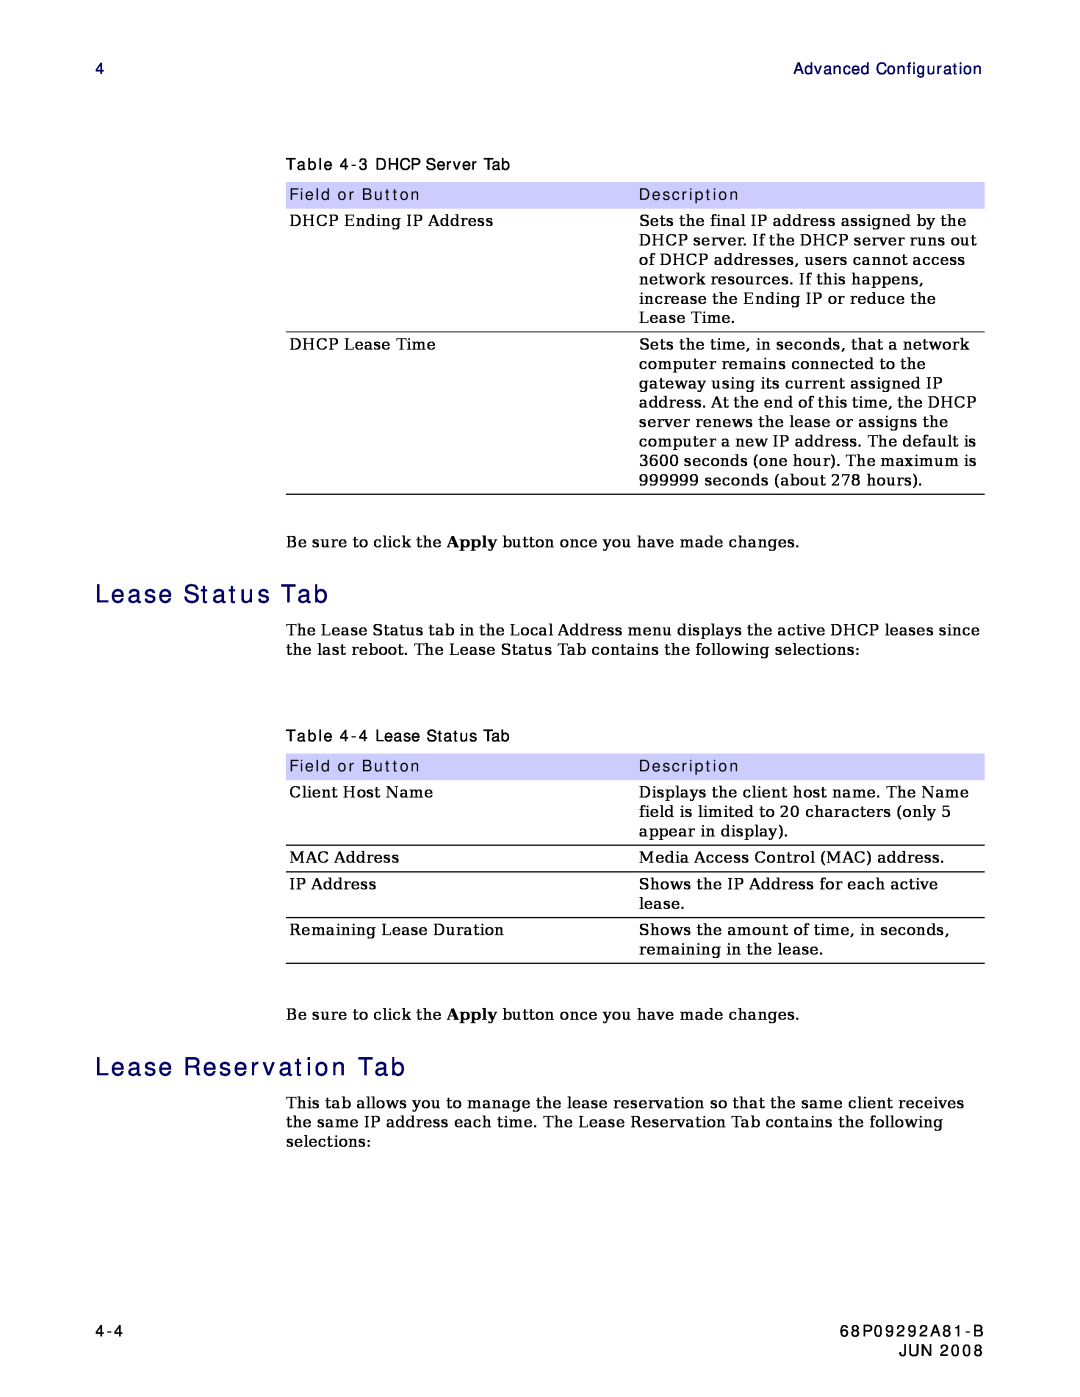 Motorola CPEI 750 manual Lease Status Tab, Lease Reservation Tab, Field or Button, Description, 68P09292A81-B 